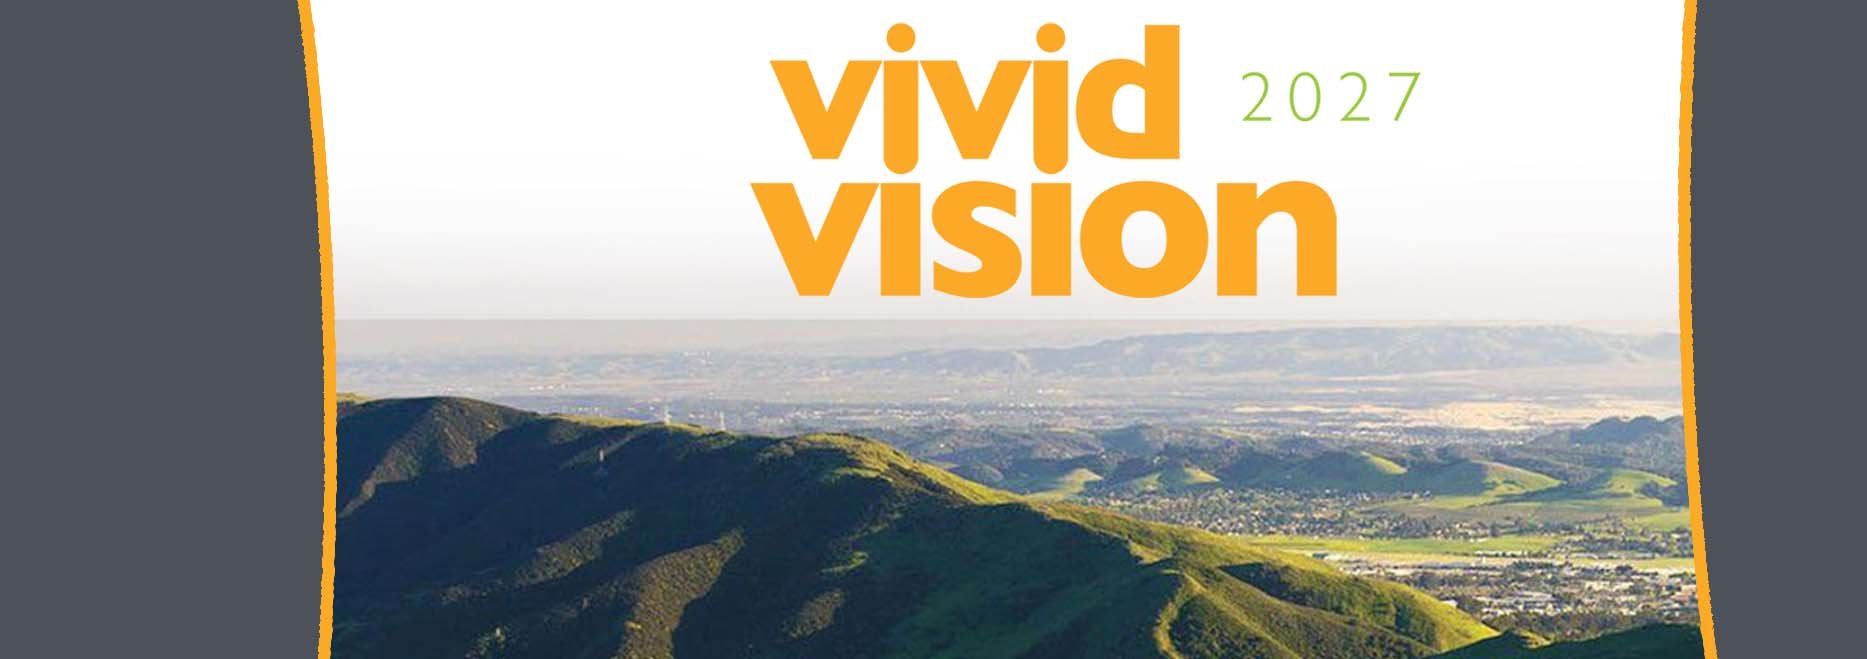 vivid vision web banner copy.jpg